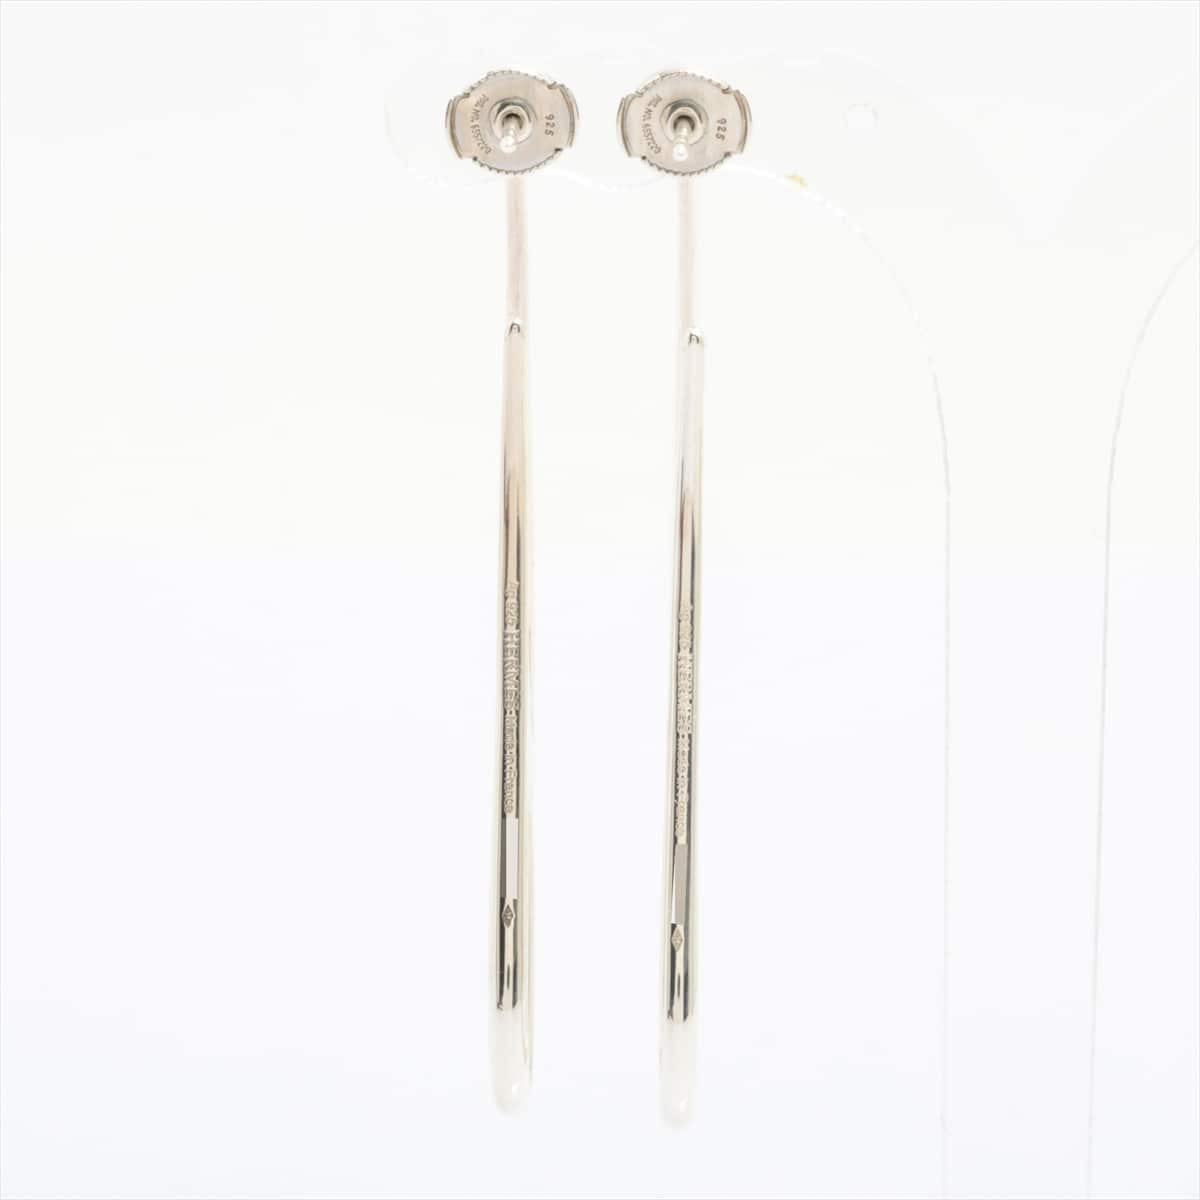 Hermès Chaîne d'Ancre punks Piercing jewelry (for both ears) 925 10.4g Silver